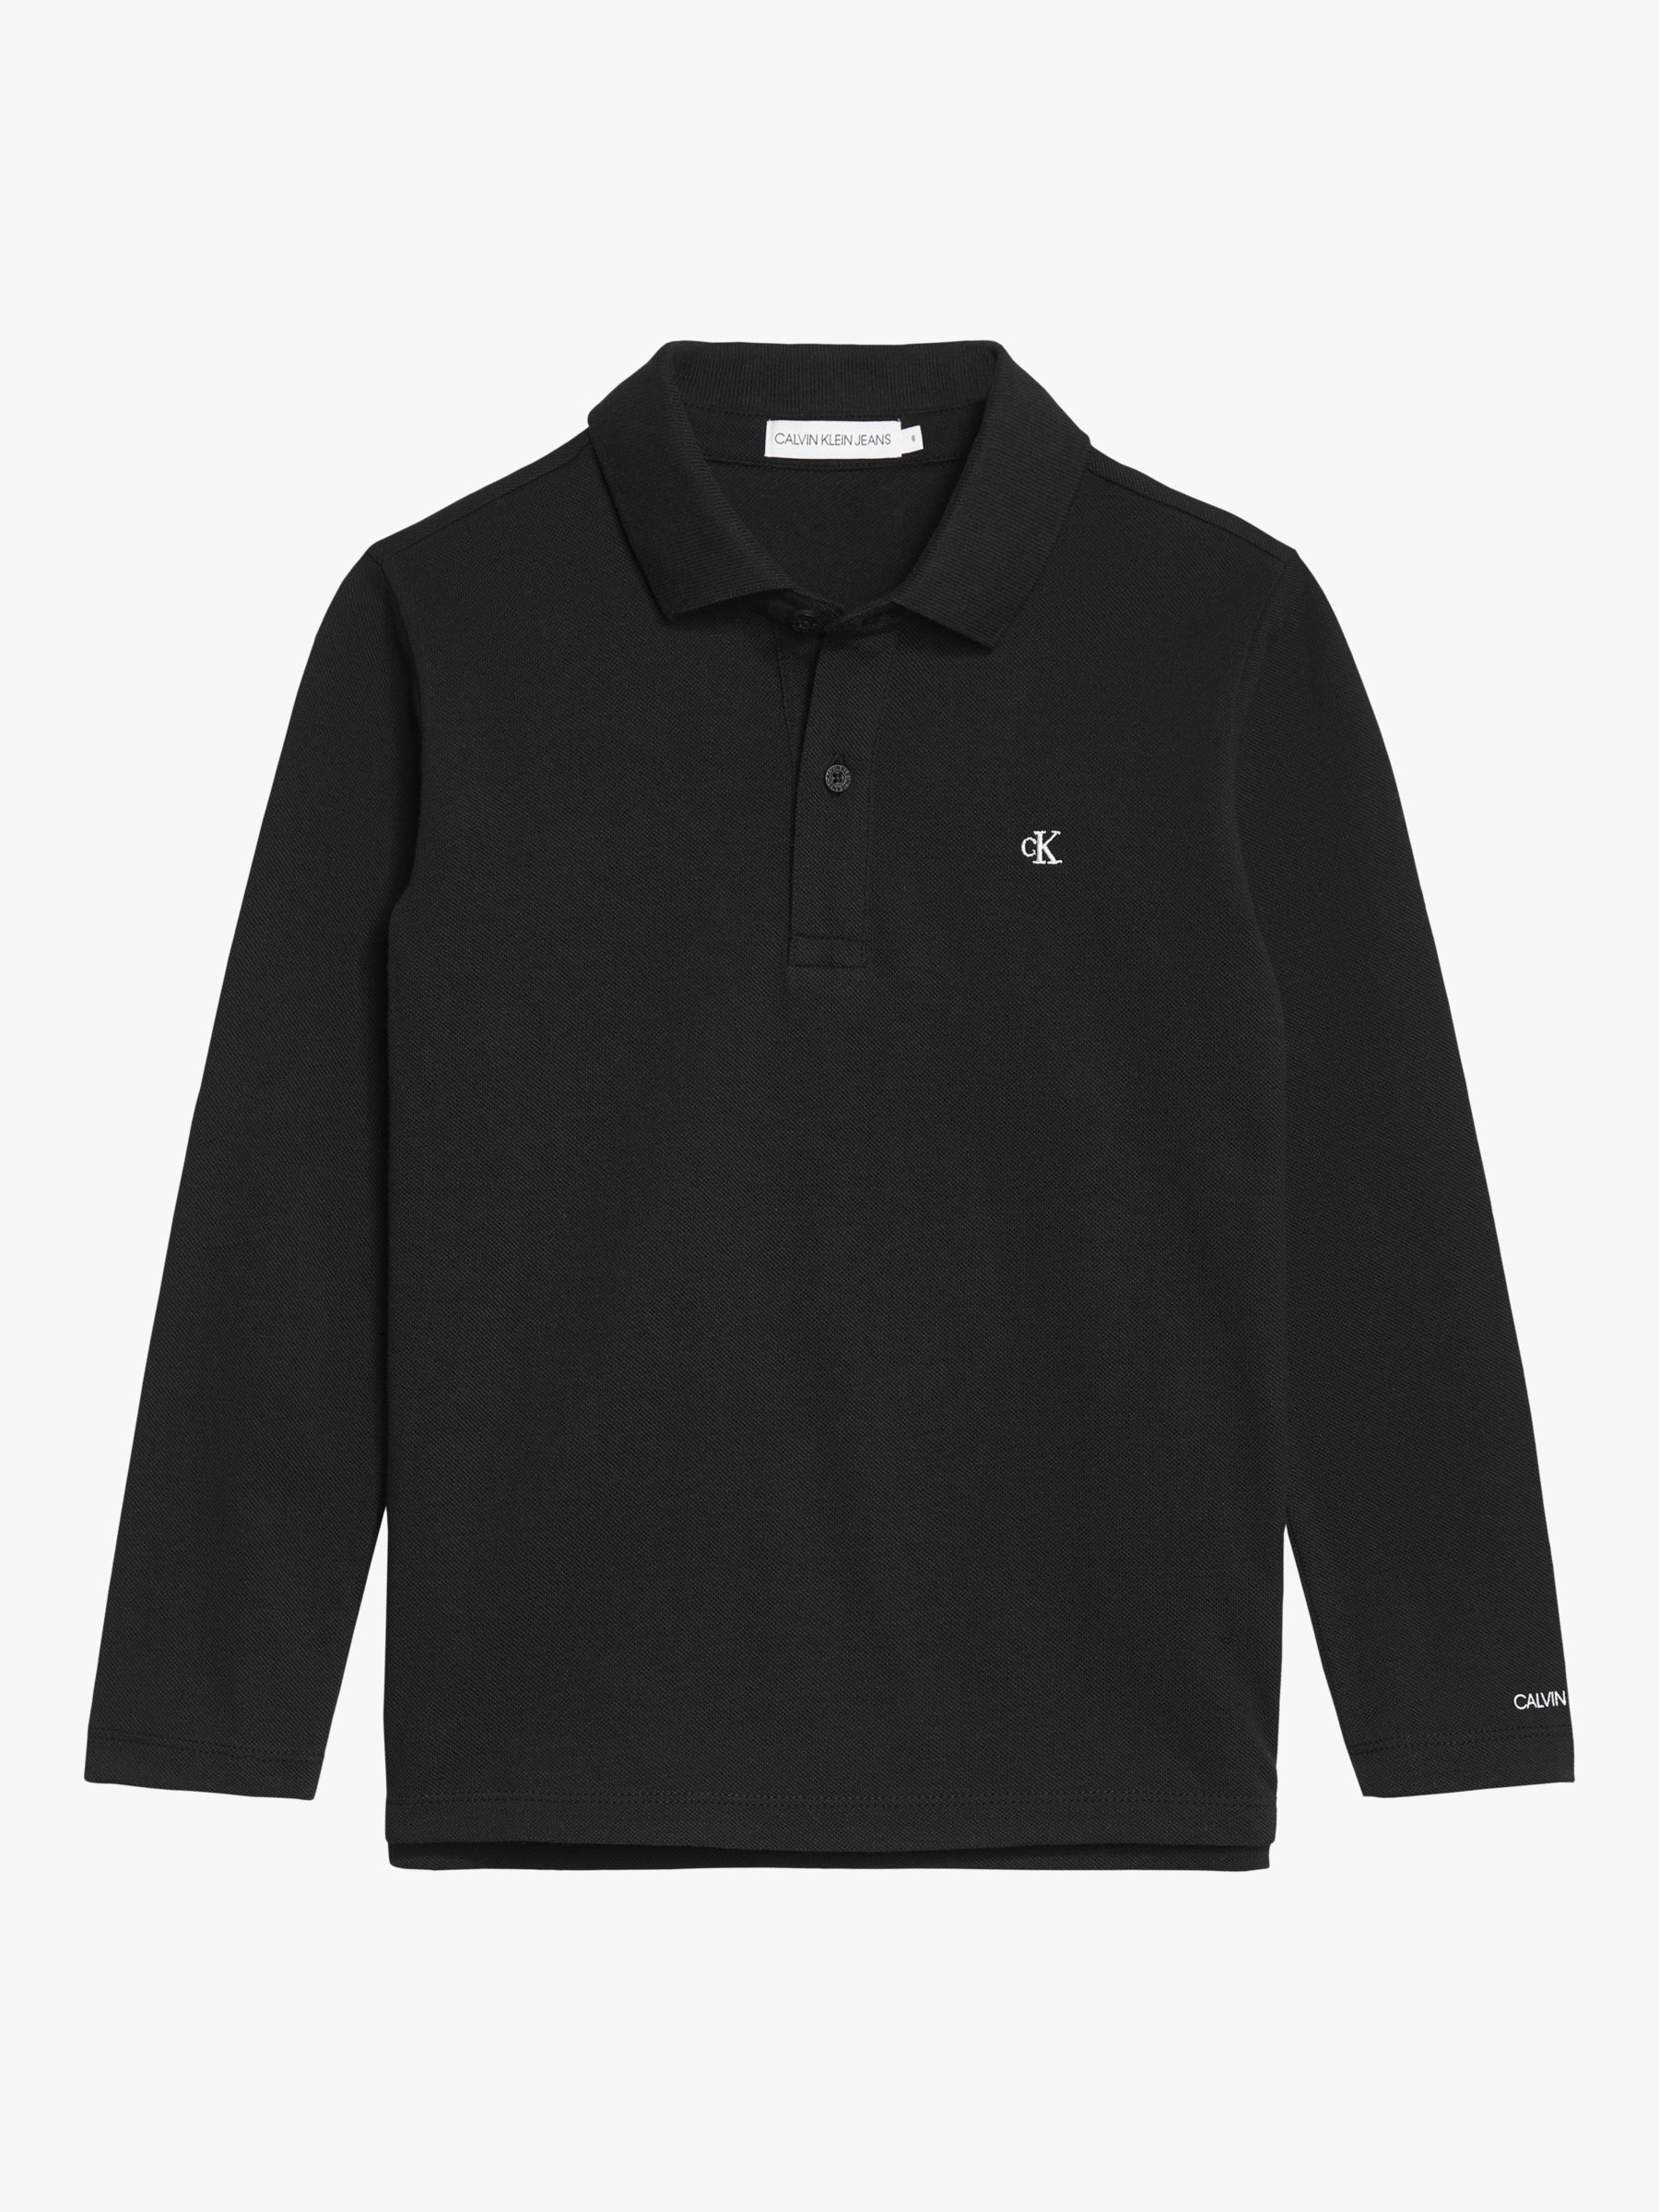 Image of Calvin Klein Boys Essential Long Sleeve Polo Top Black